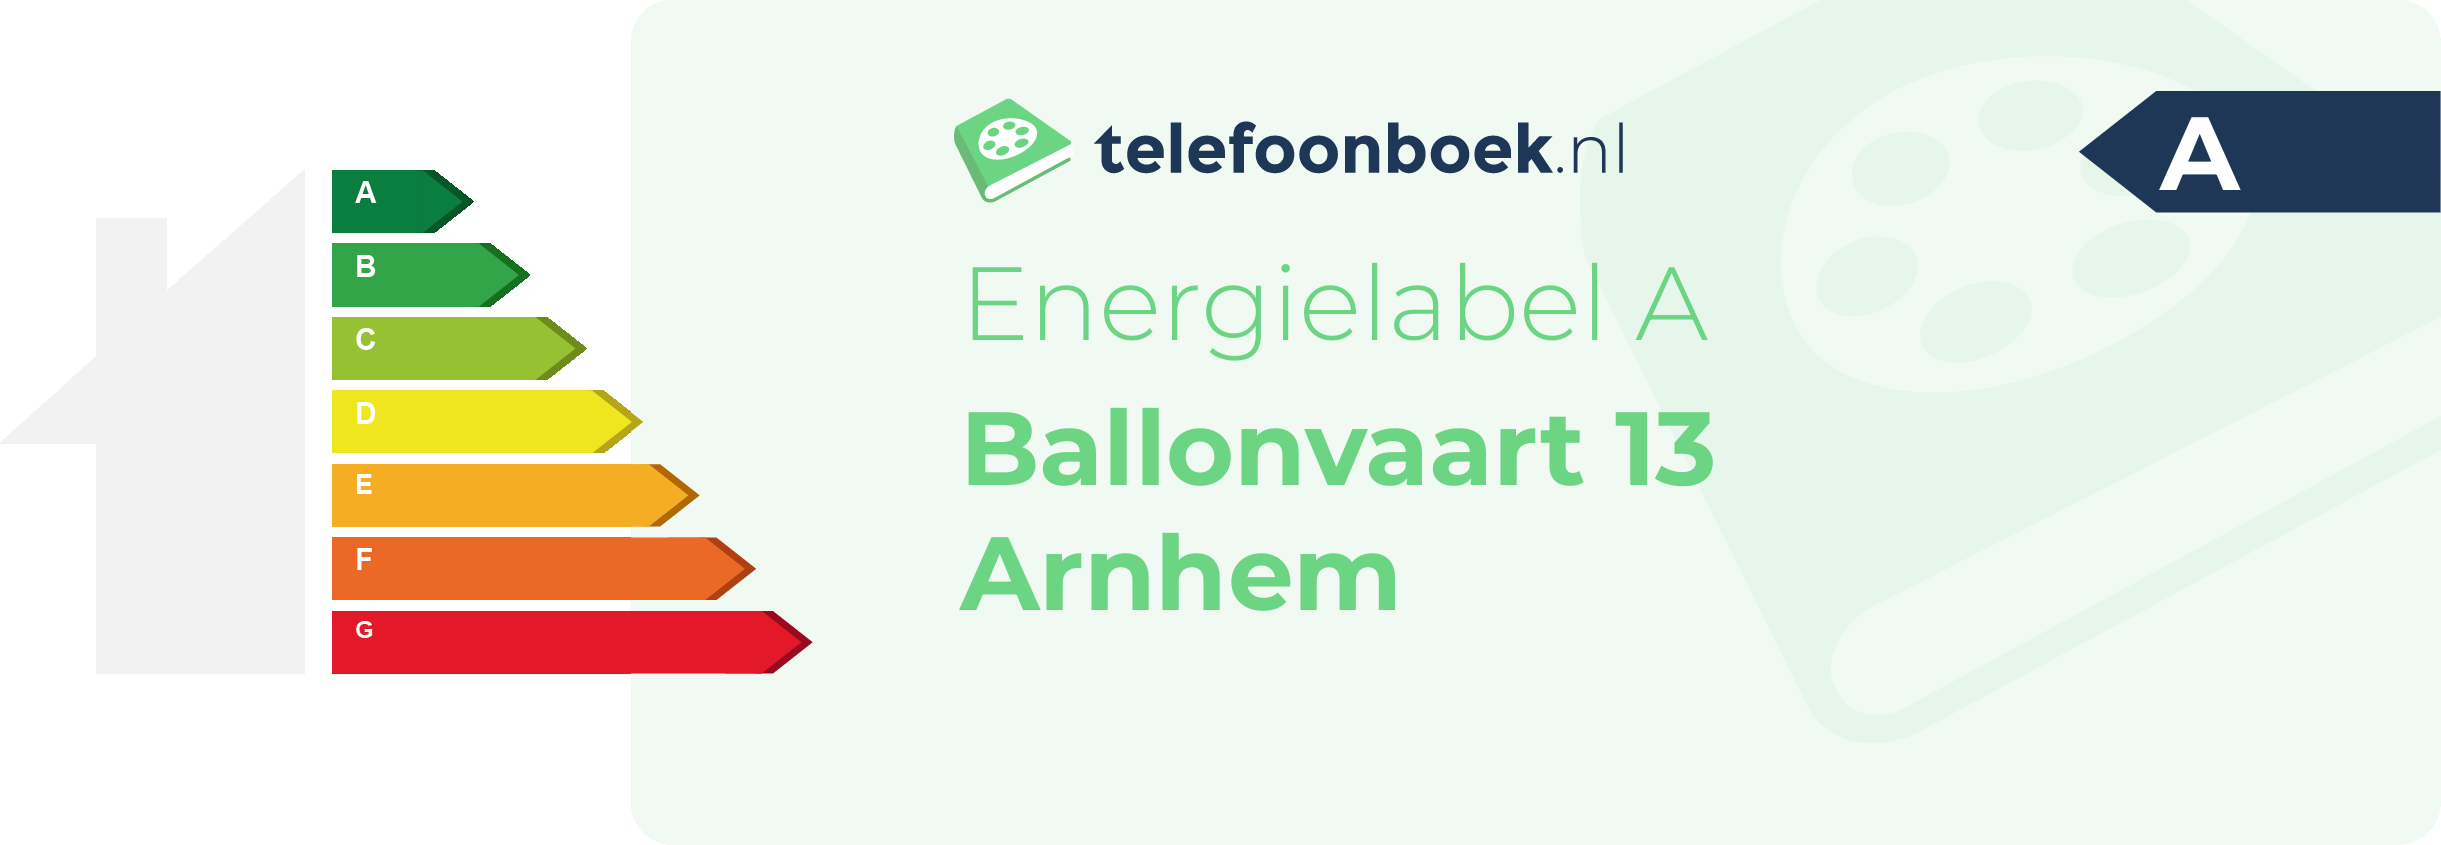 Energielabel Ballonvaart 13 Arnhem